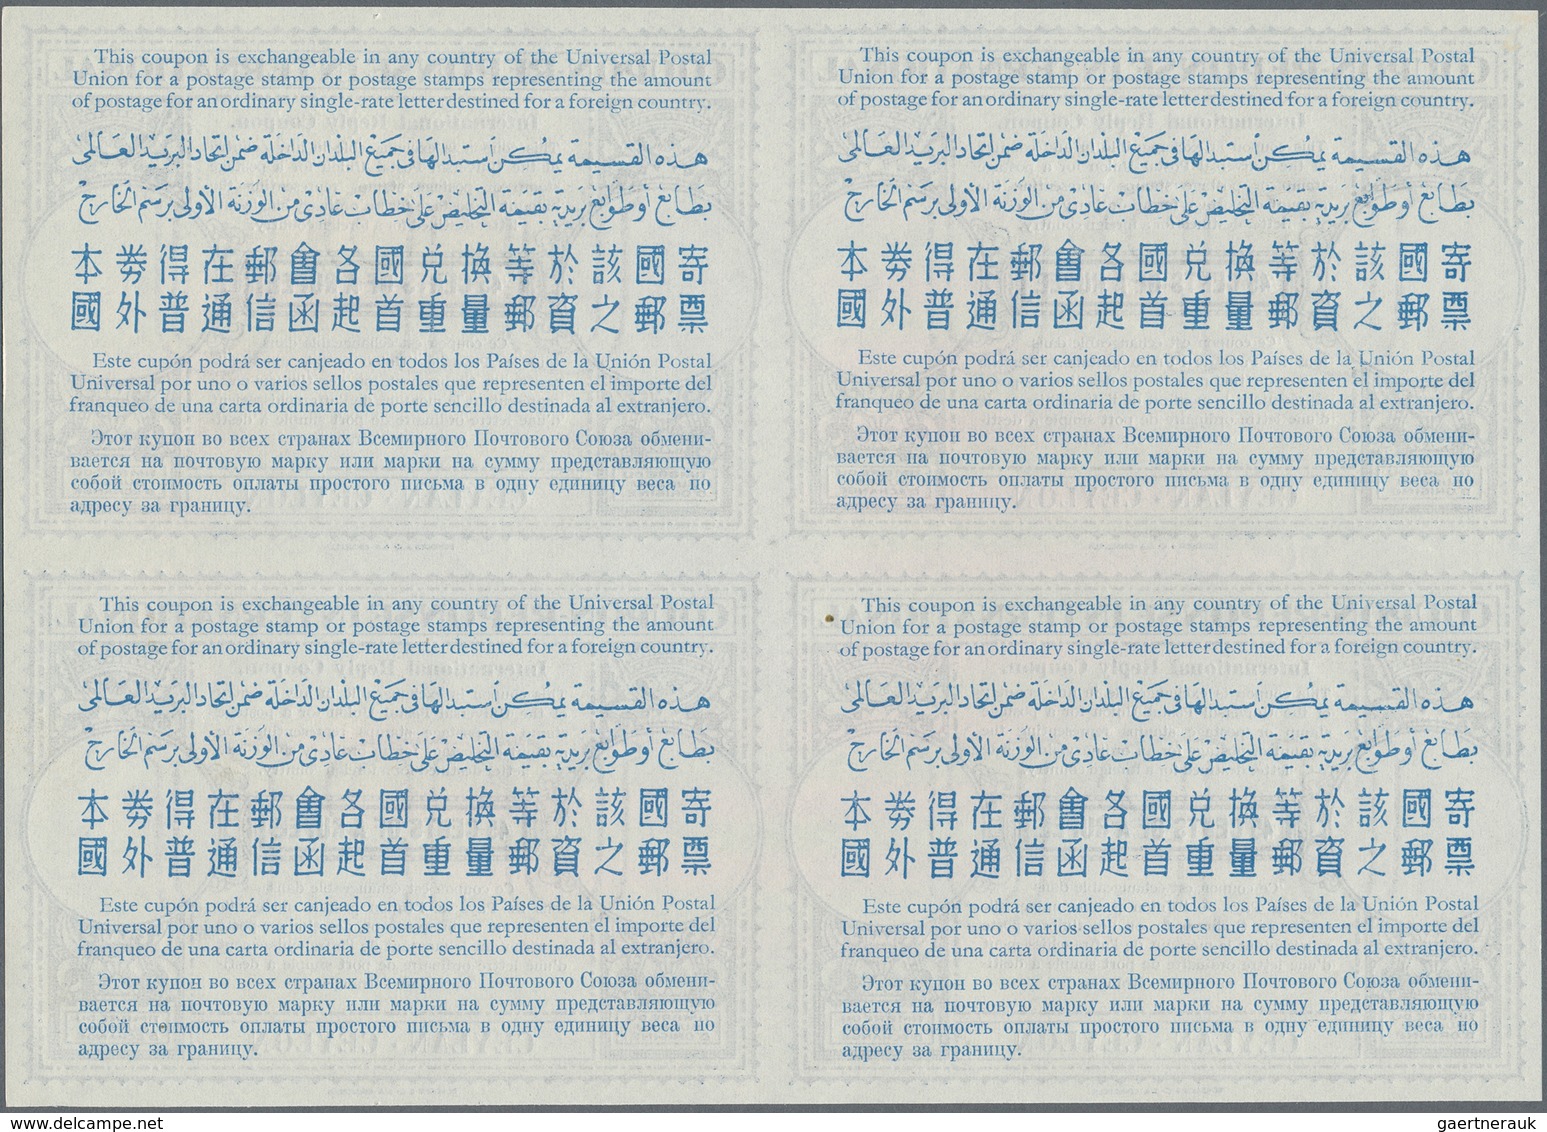 Ceylon / Sri Lanka: 1952. International Reply Coupon 45 Cents Of A Rupee (London Type) In An Unused - Sri Lanka (Ceylon) (1948-...)